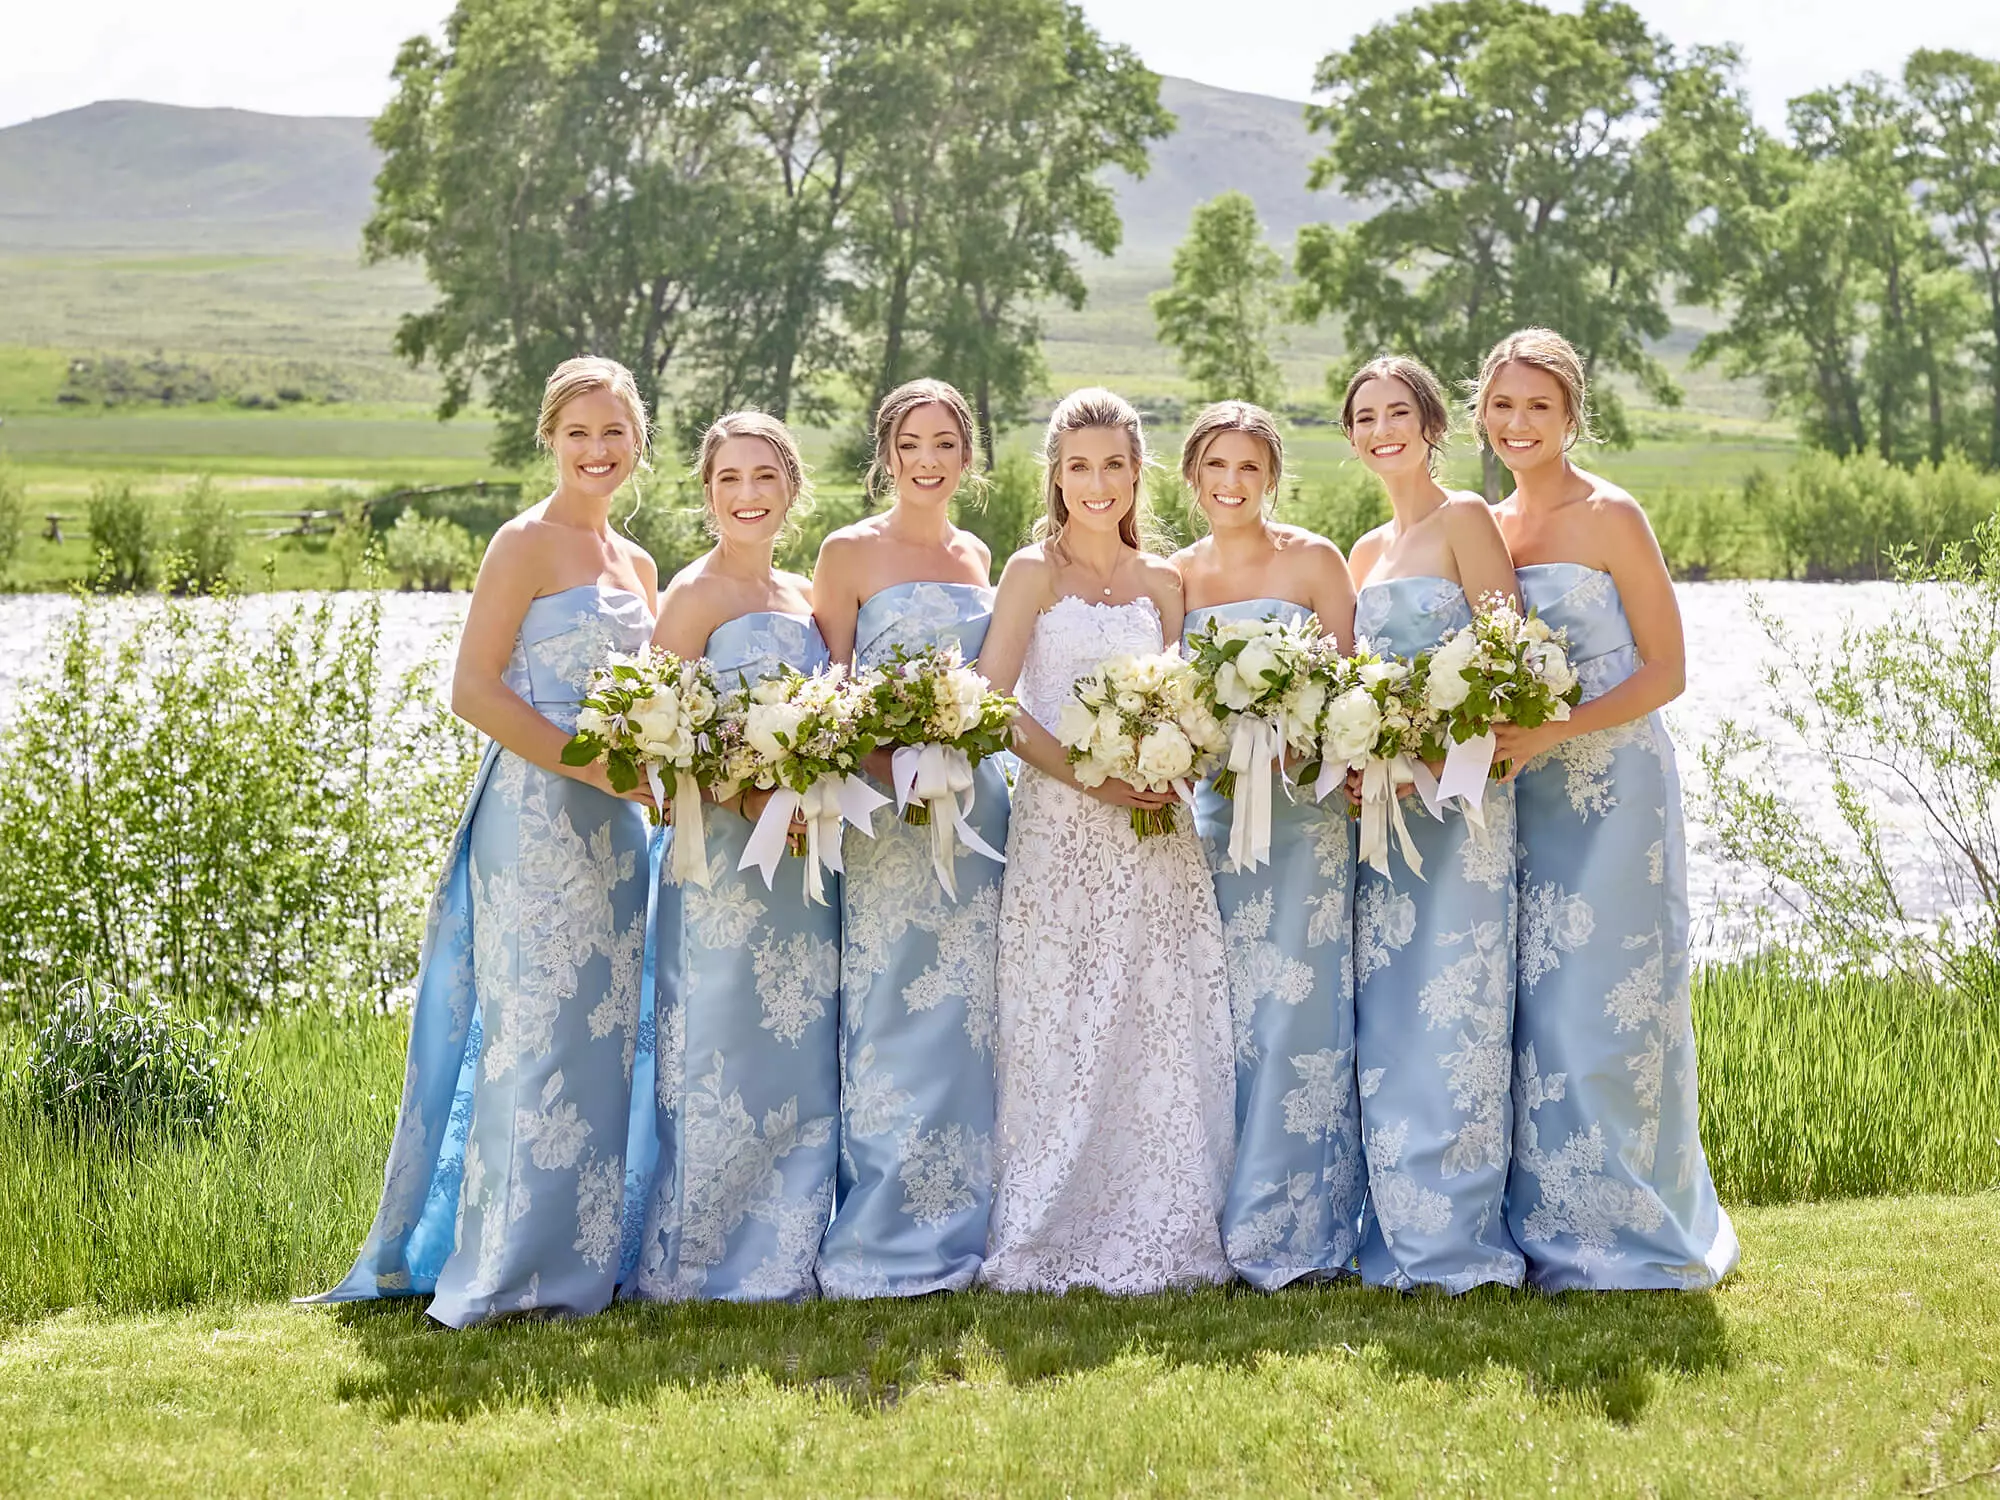 The Stylish Bride bridesmaids at Brush Creek Ranch wedding venue